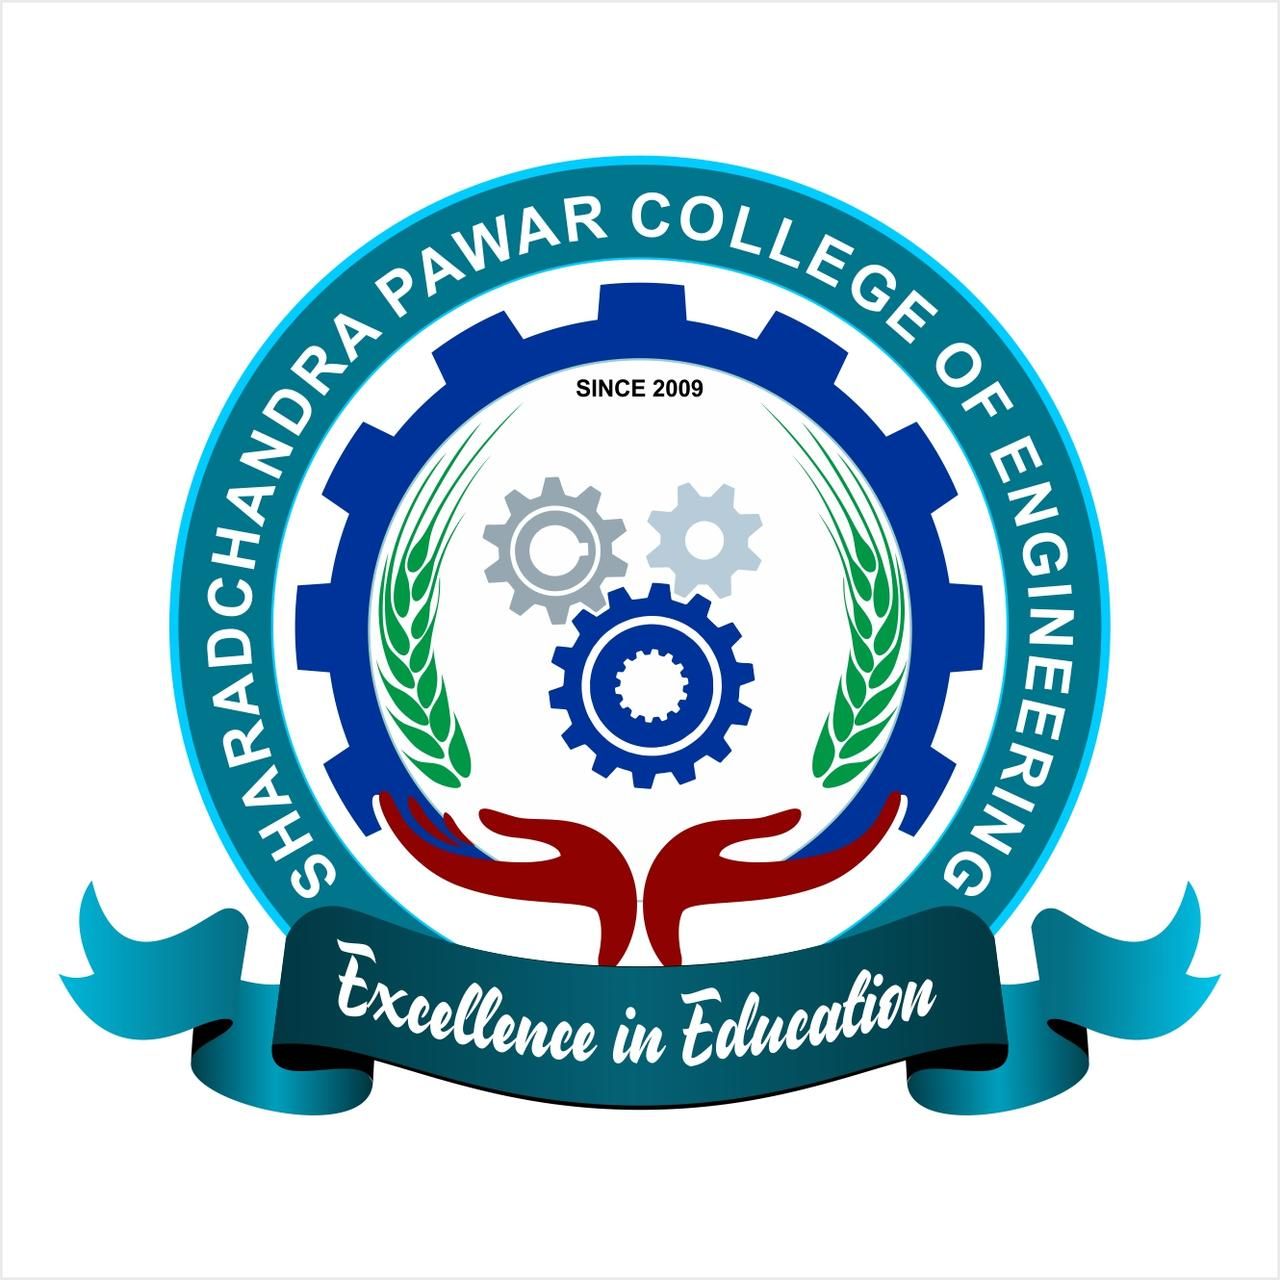 Sharadchandra Pawar College Of Engineering